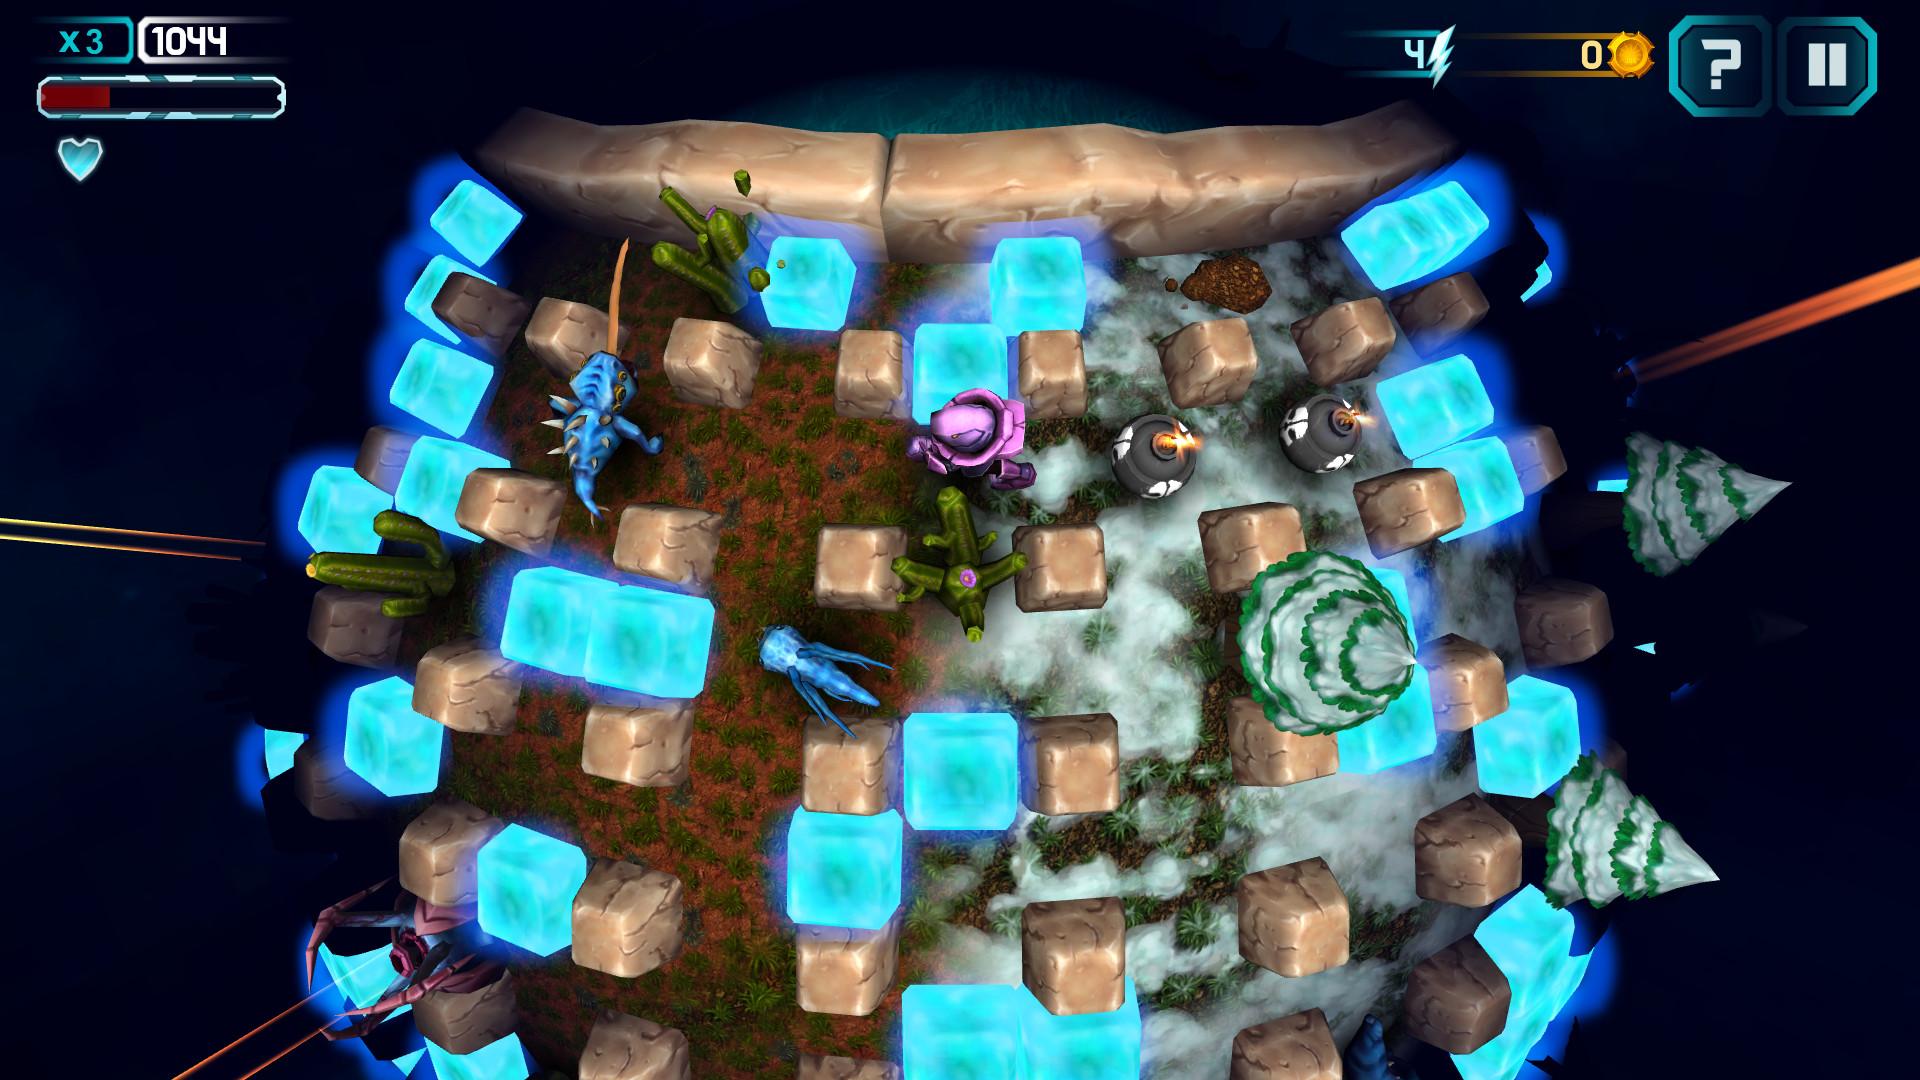 Screenshot №1 from game BomberZone